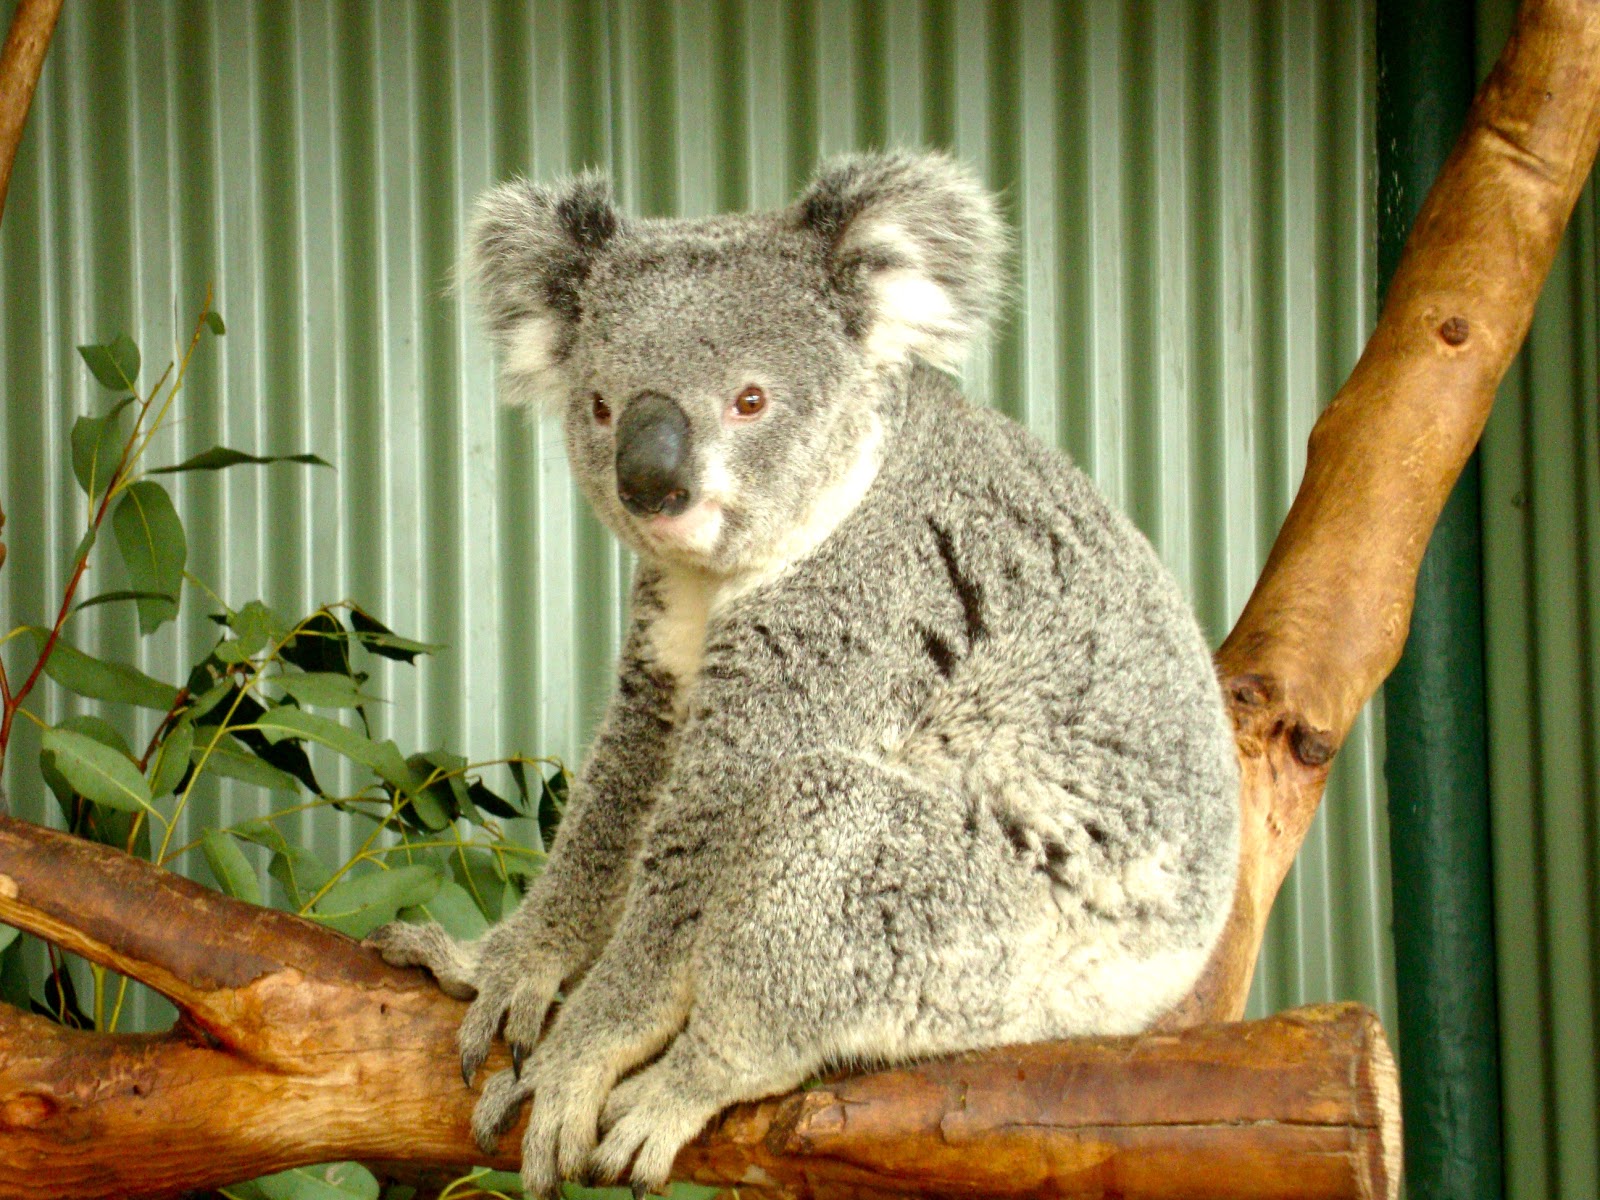 5200 Gambar Hewan Kangguru Dan Koala Terbaru